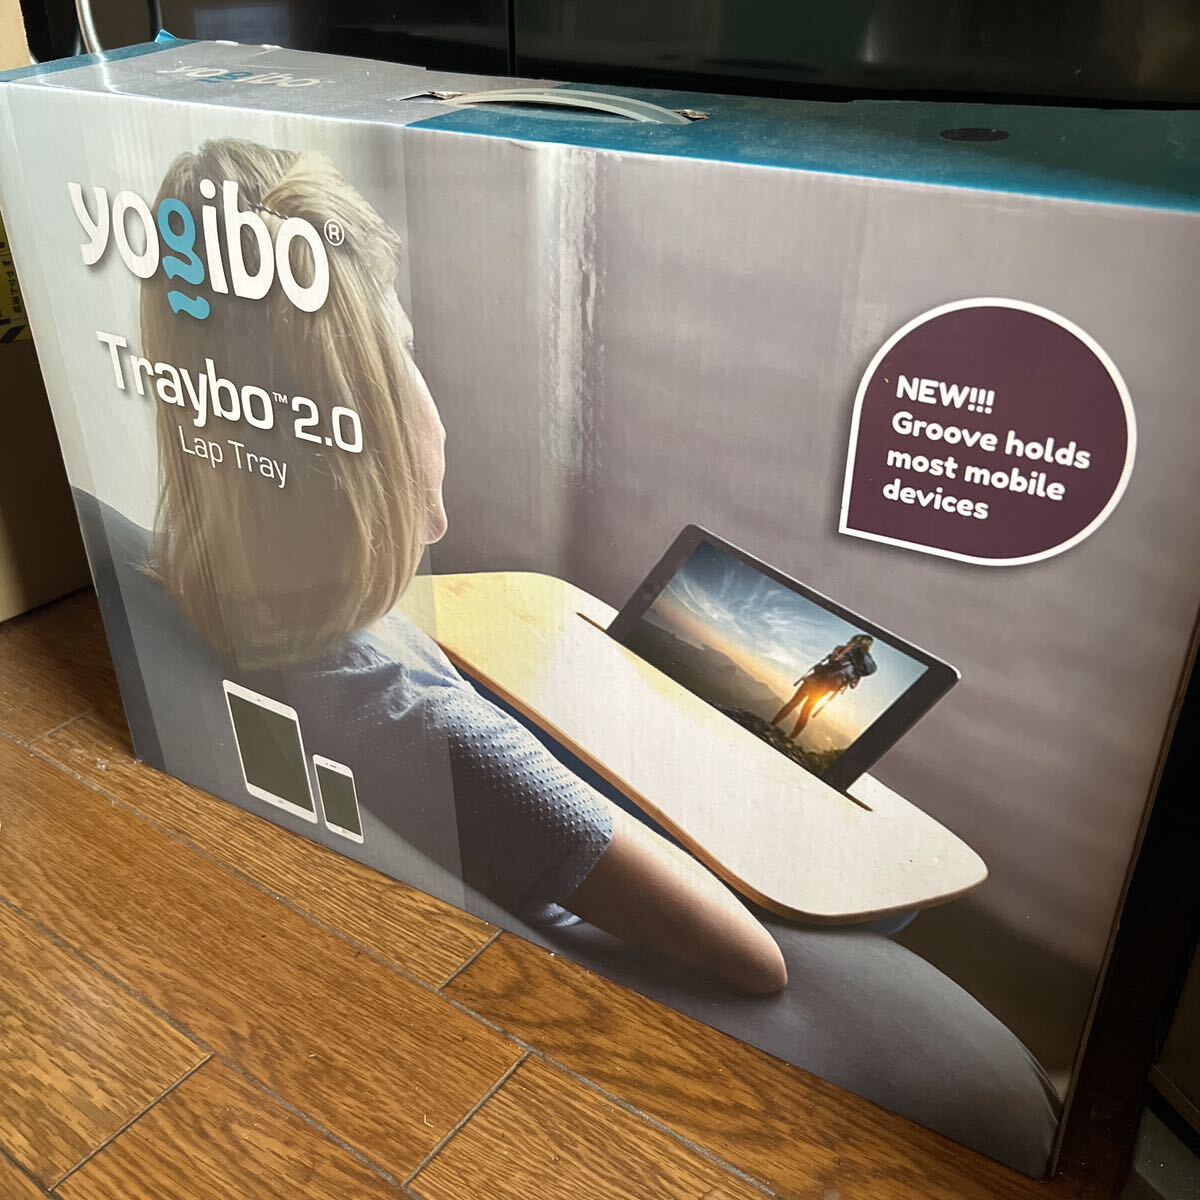 yogibo2.0 Lap Tray ヨギボー ラップトレイ iPadや携帯やノート